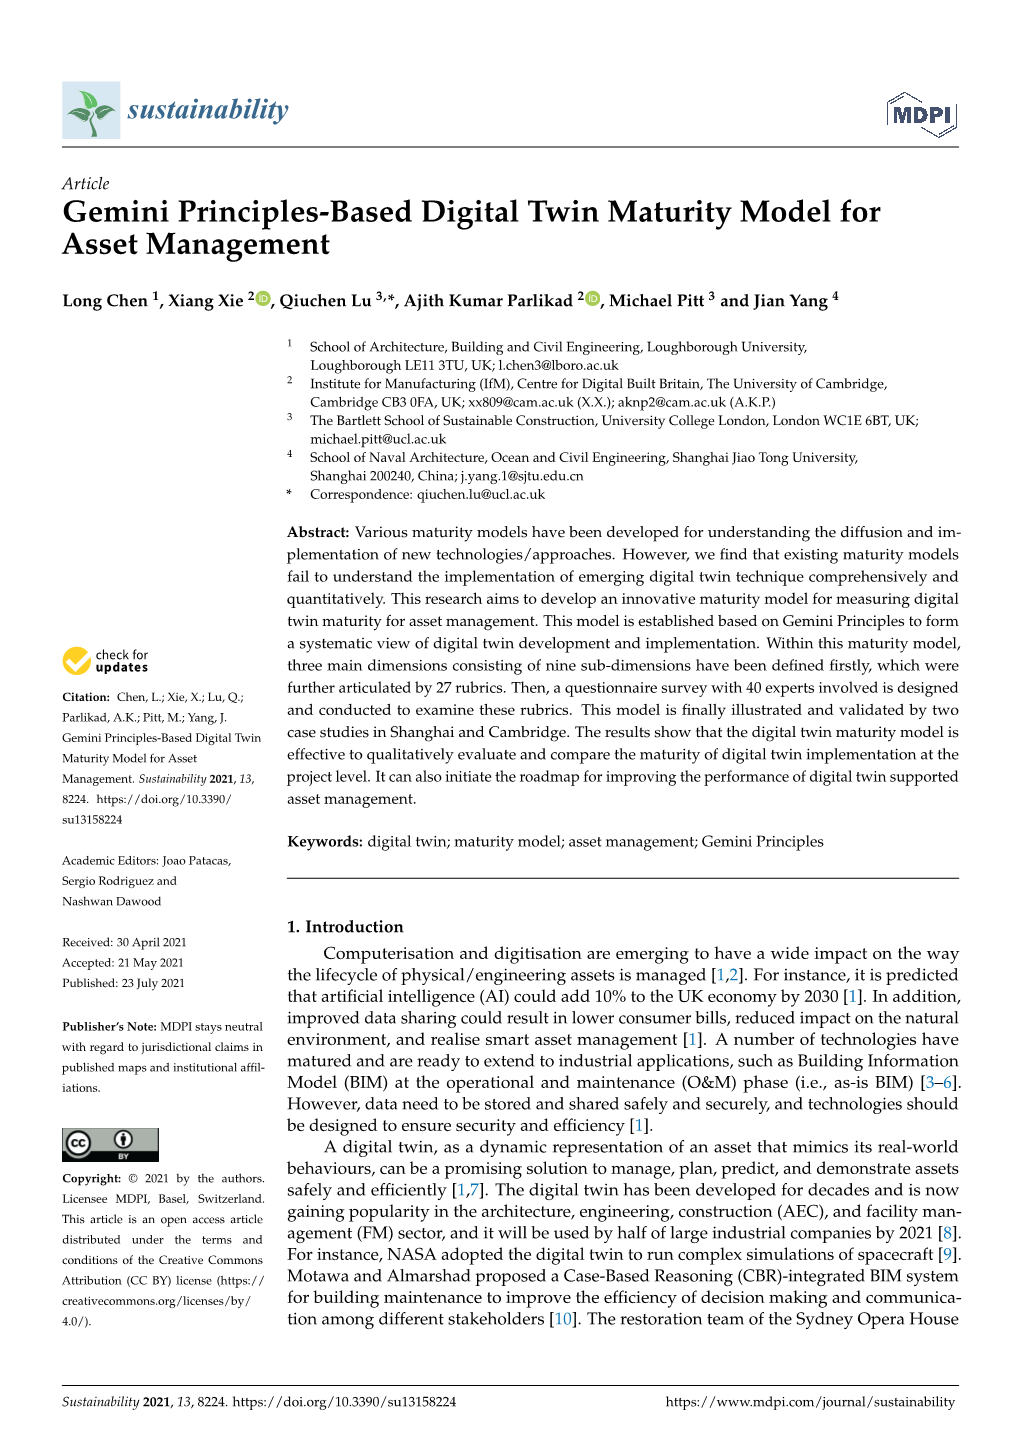 Gemini Principles-Based Digital Twin Maturity Model for Asset Management